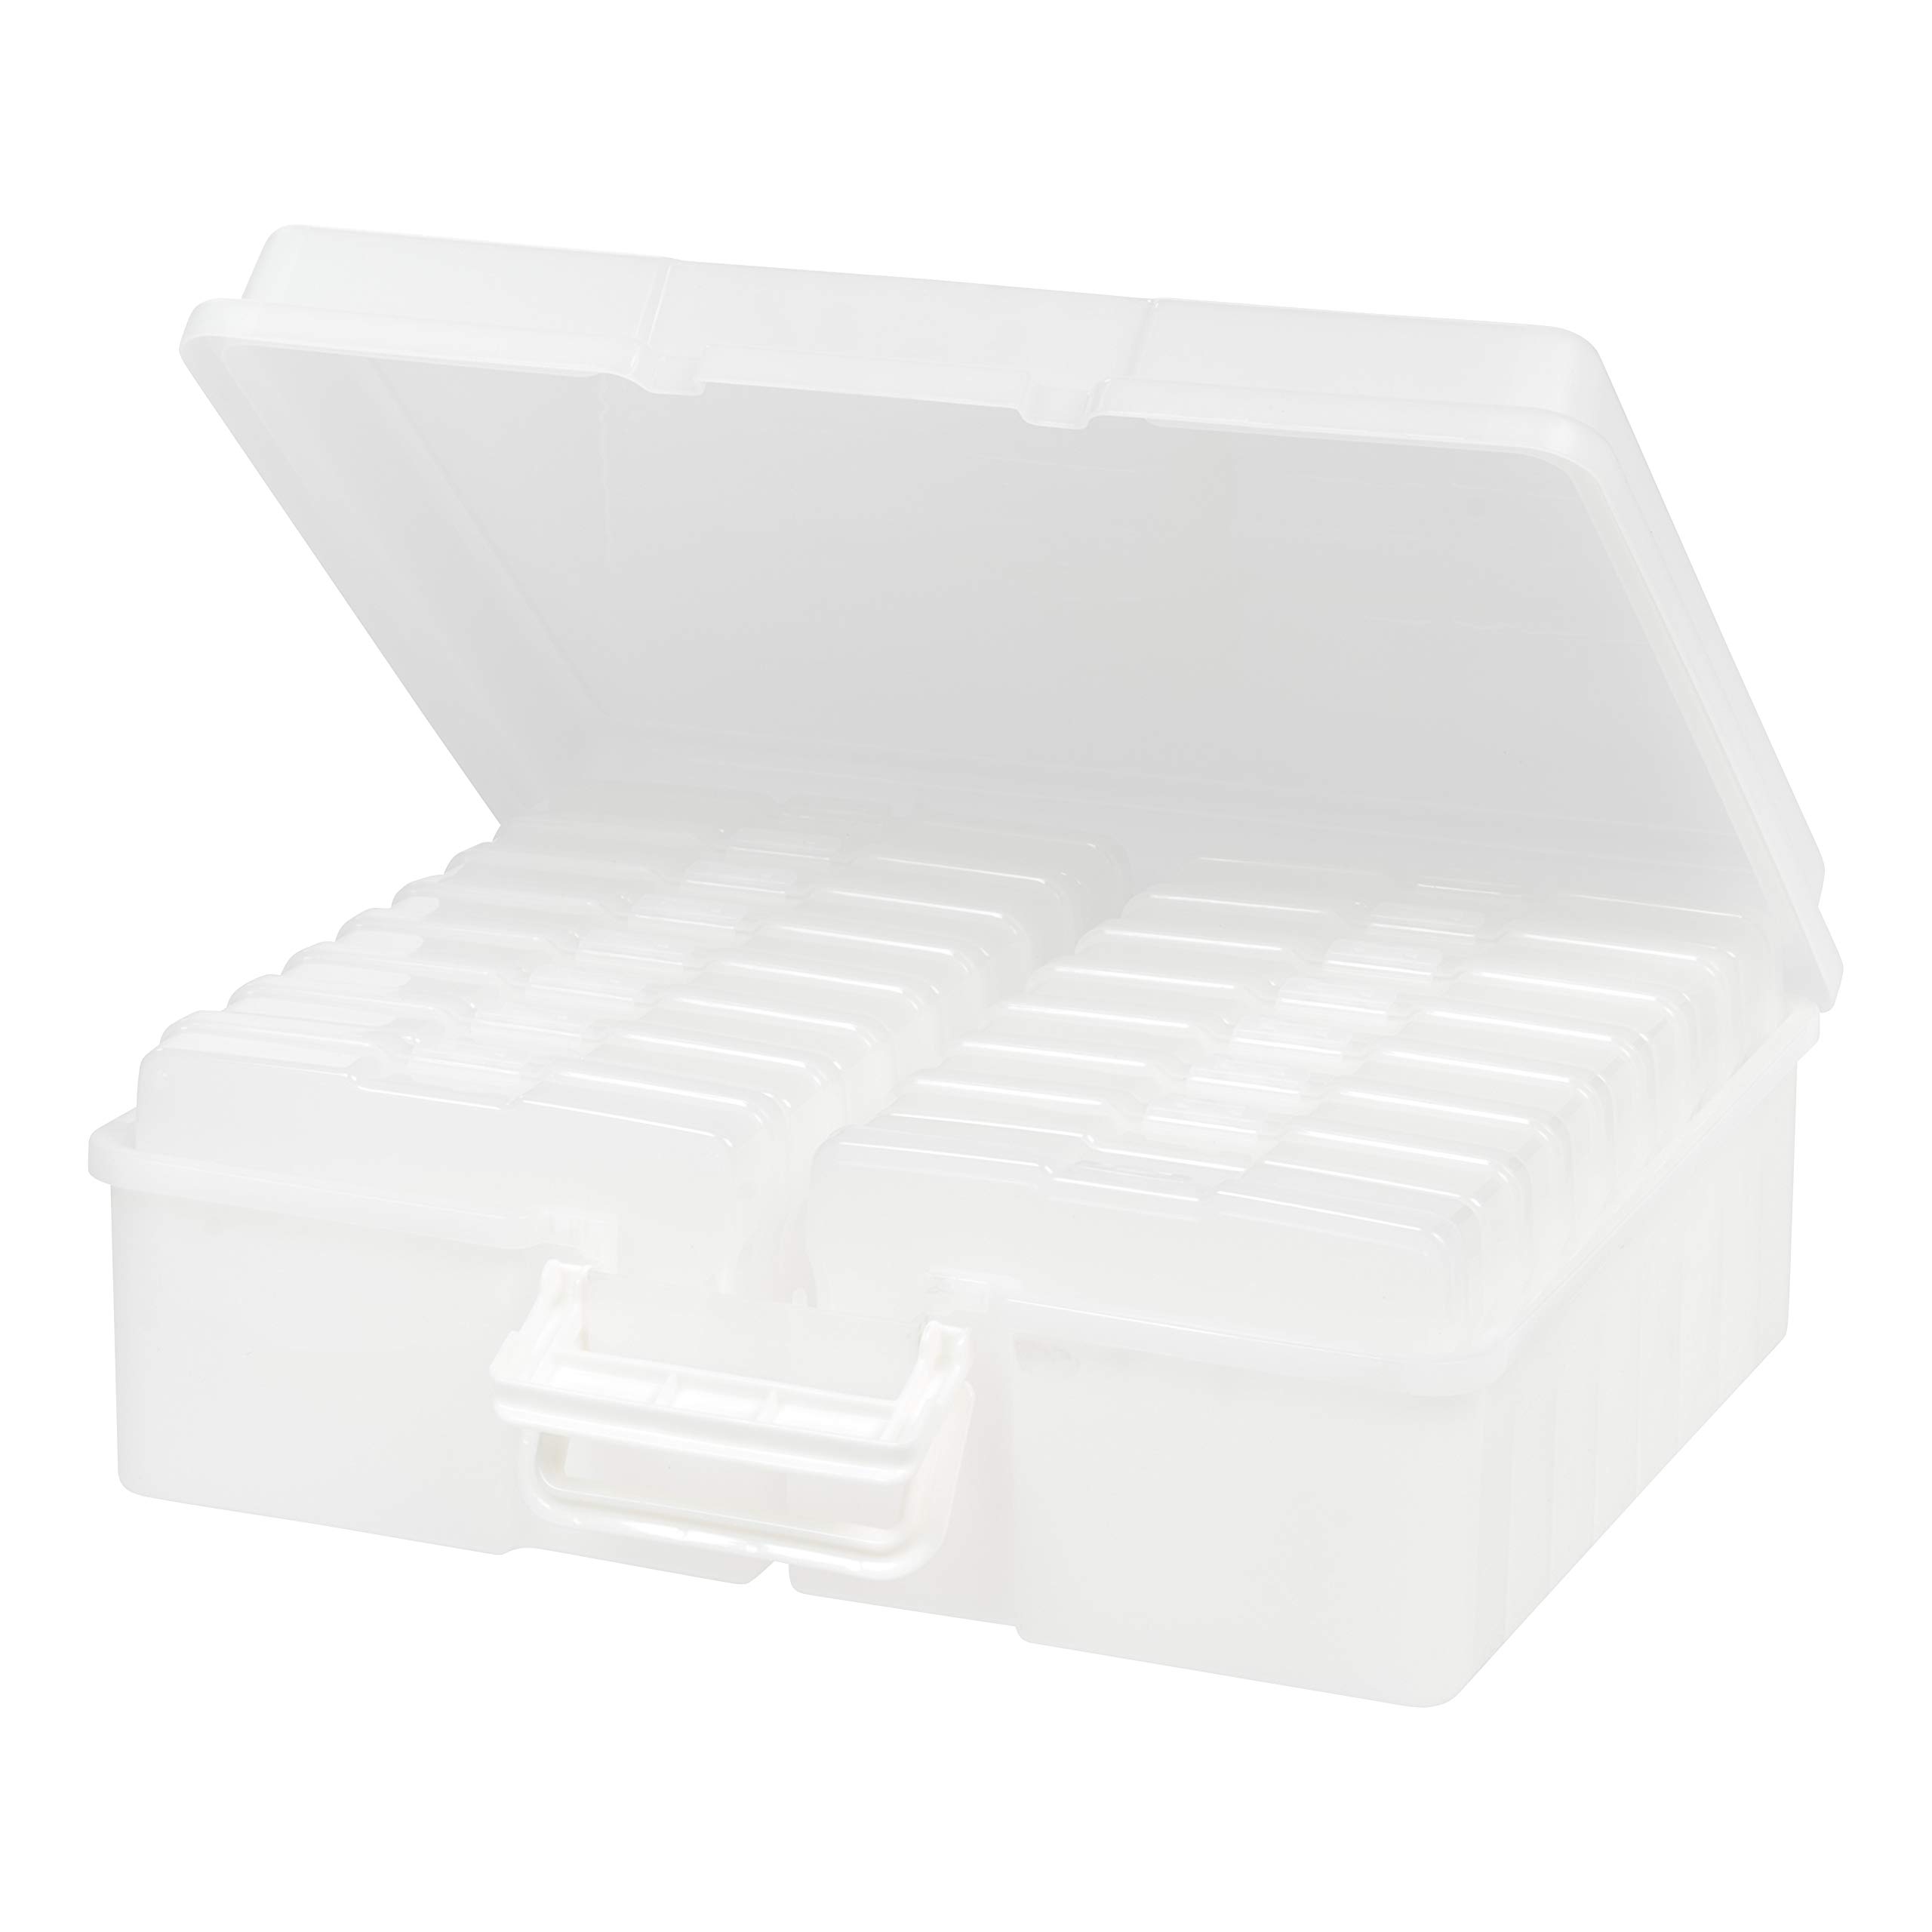  novelinks Stackable Plastic Clear Storage Box